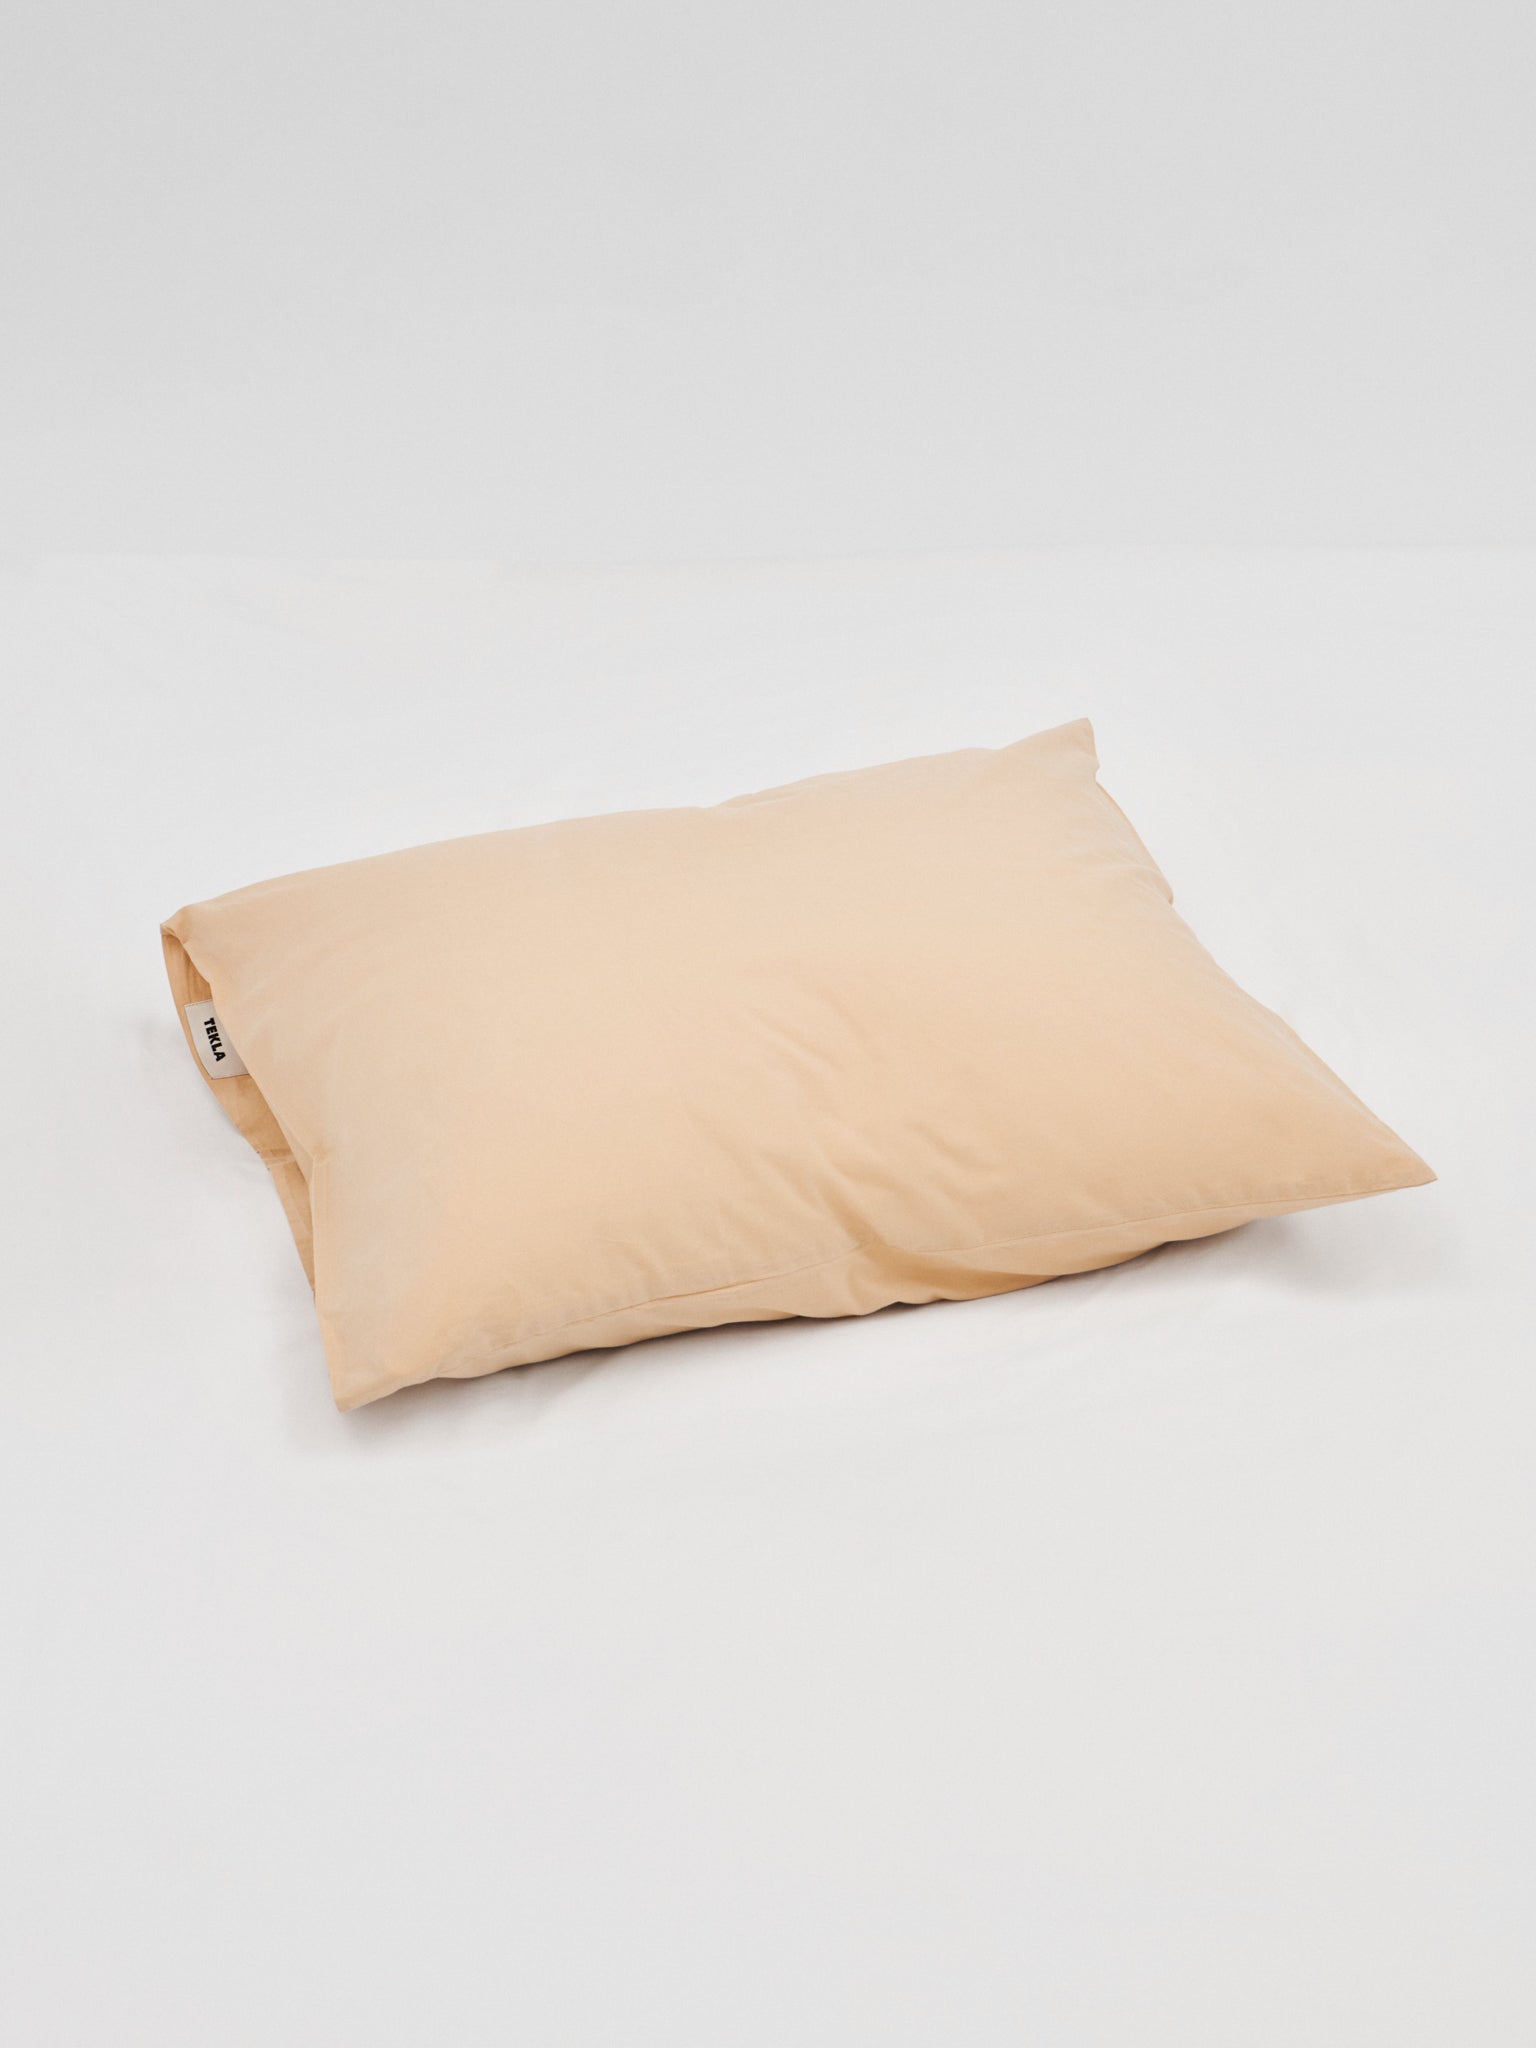 Tekla - Percale Pillow Sham in Sand Beige